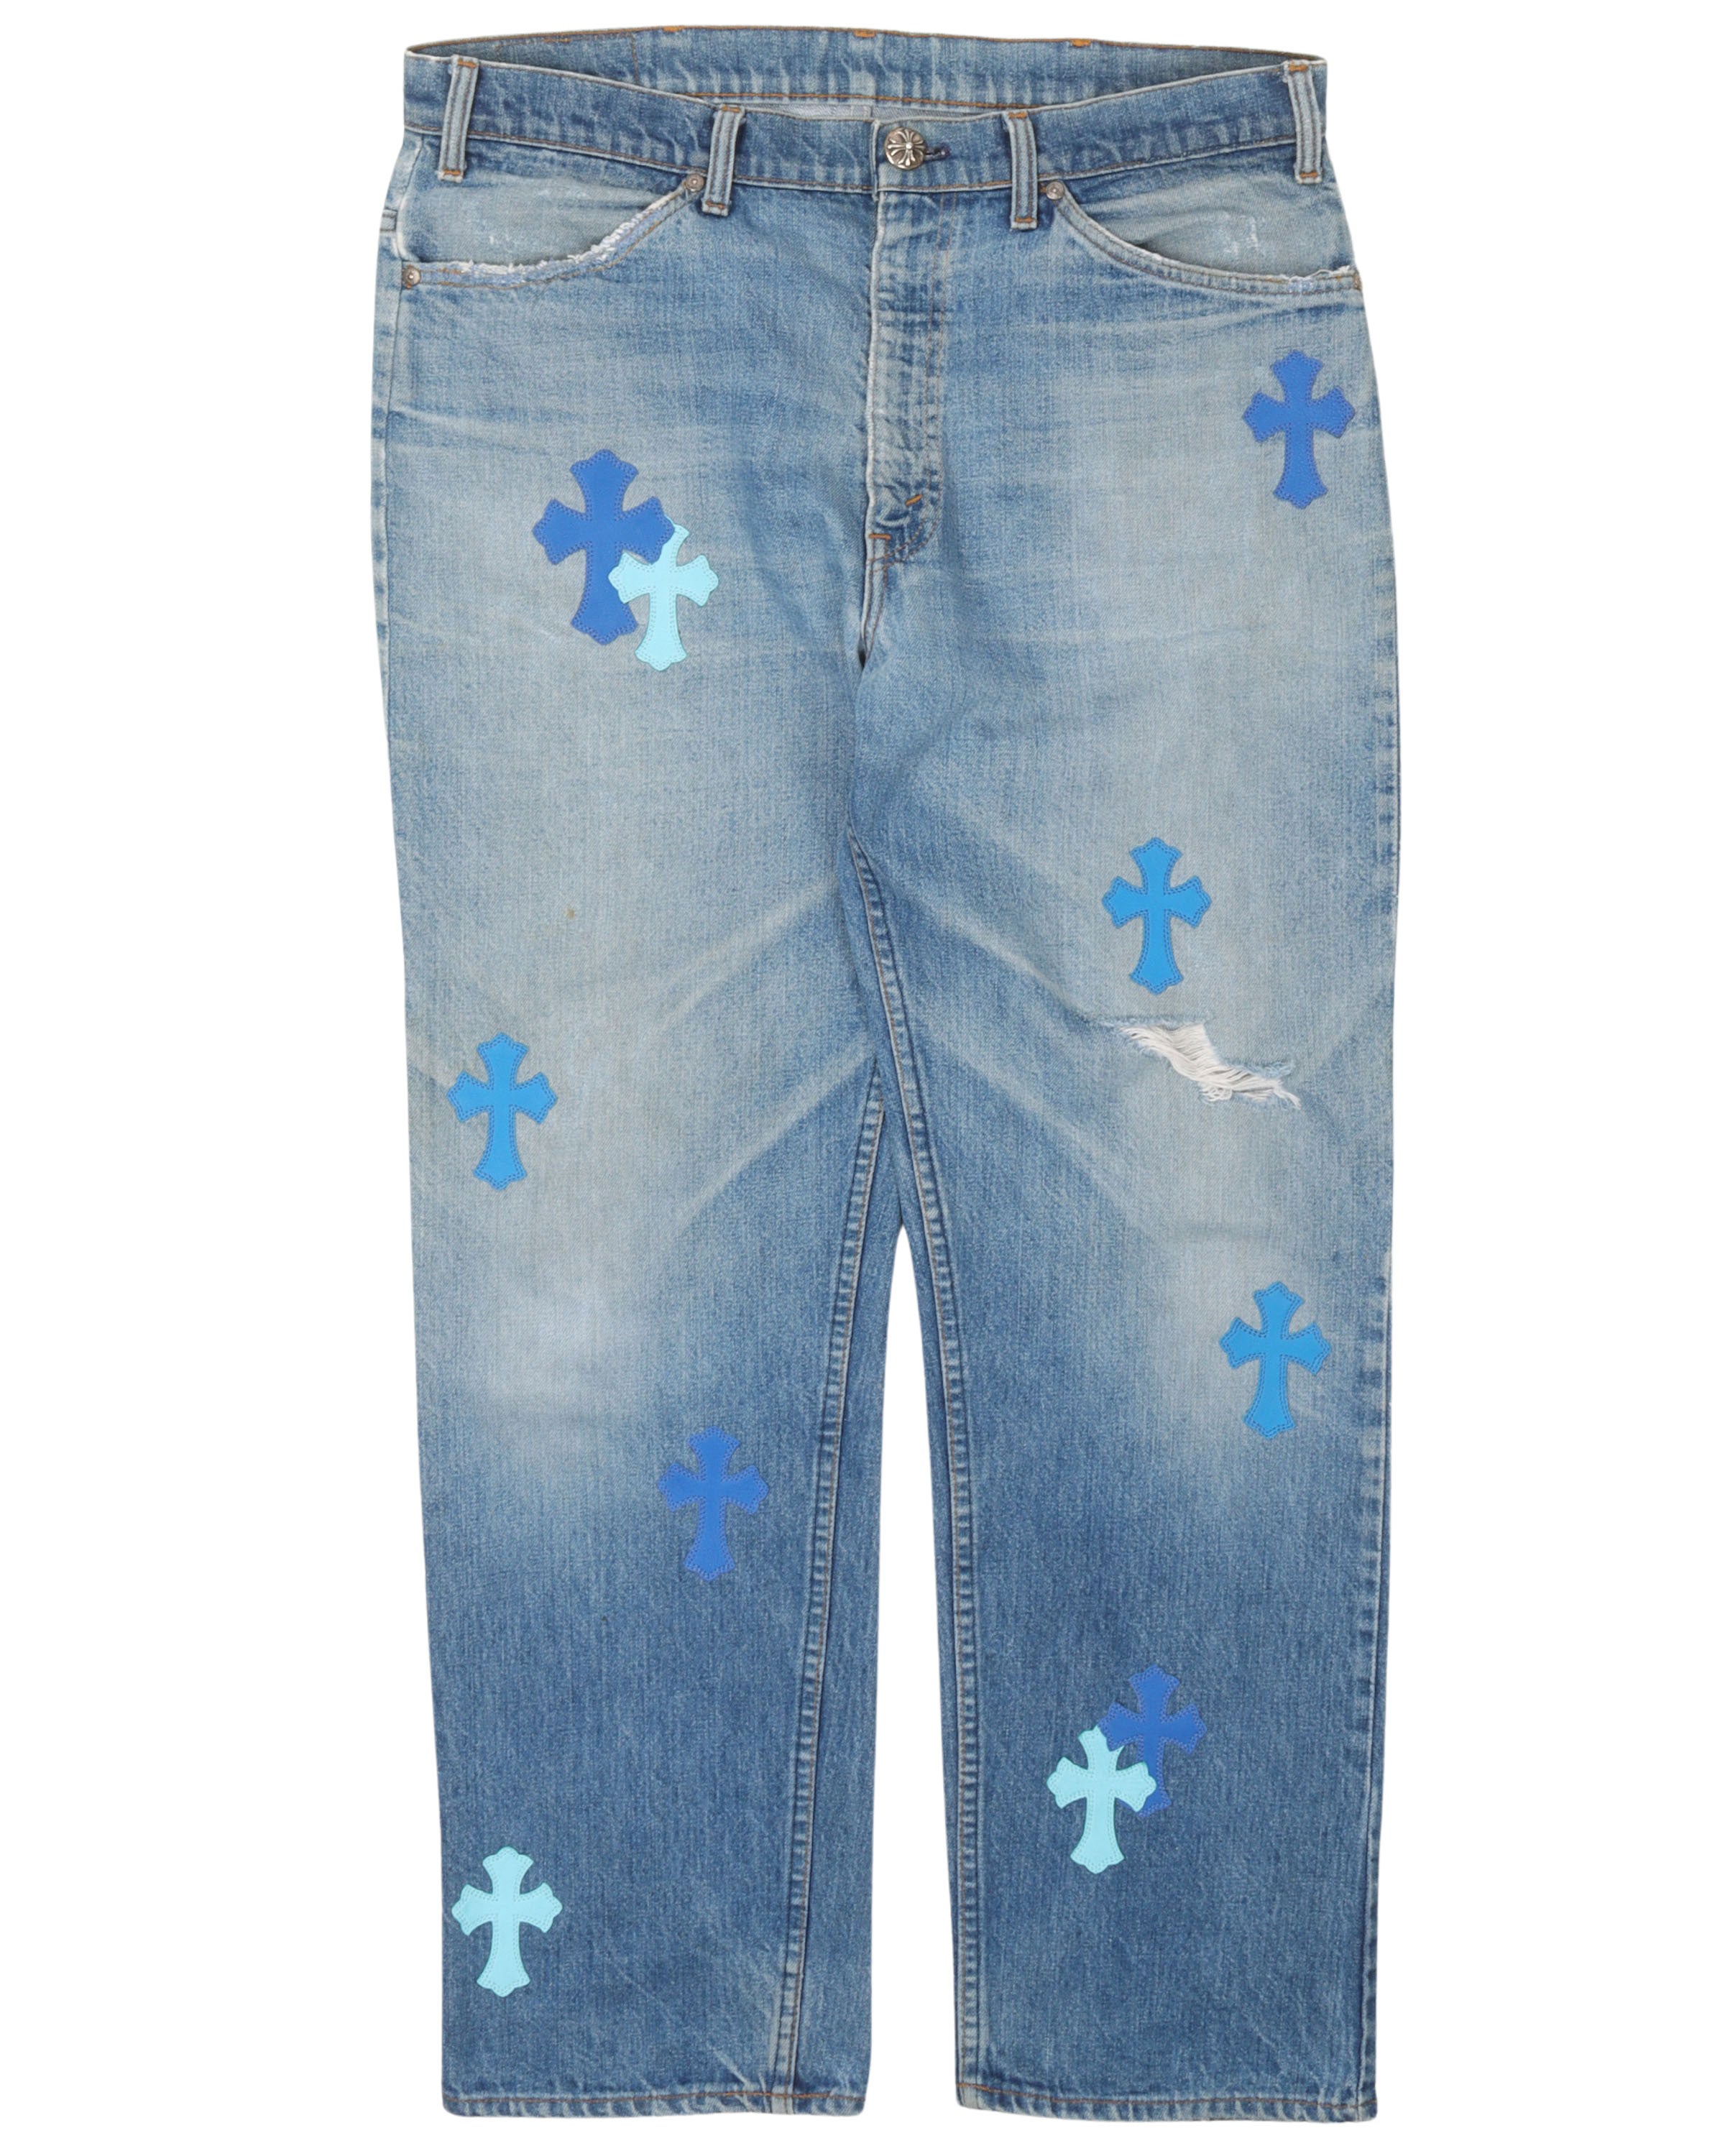 Miami Art Basel Cross Patch Jeans